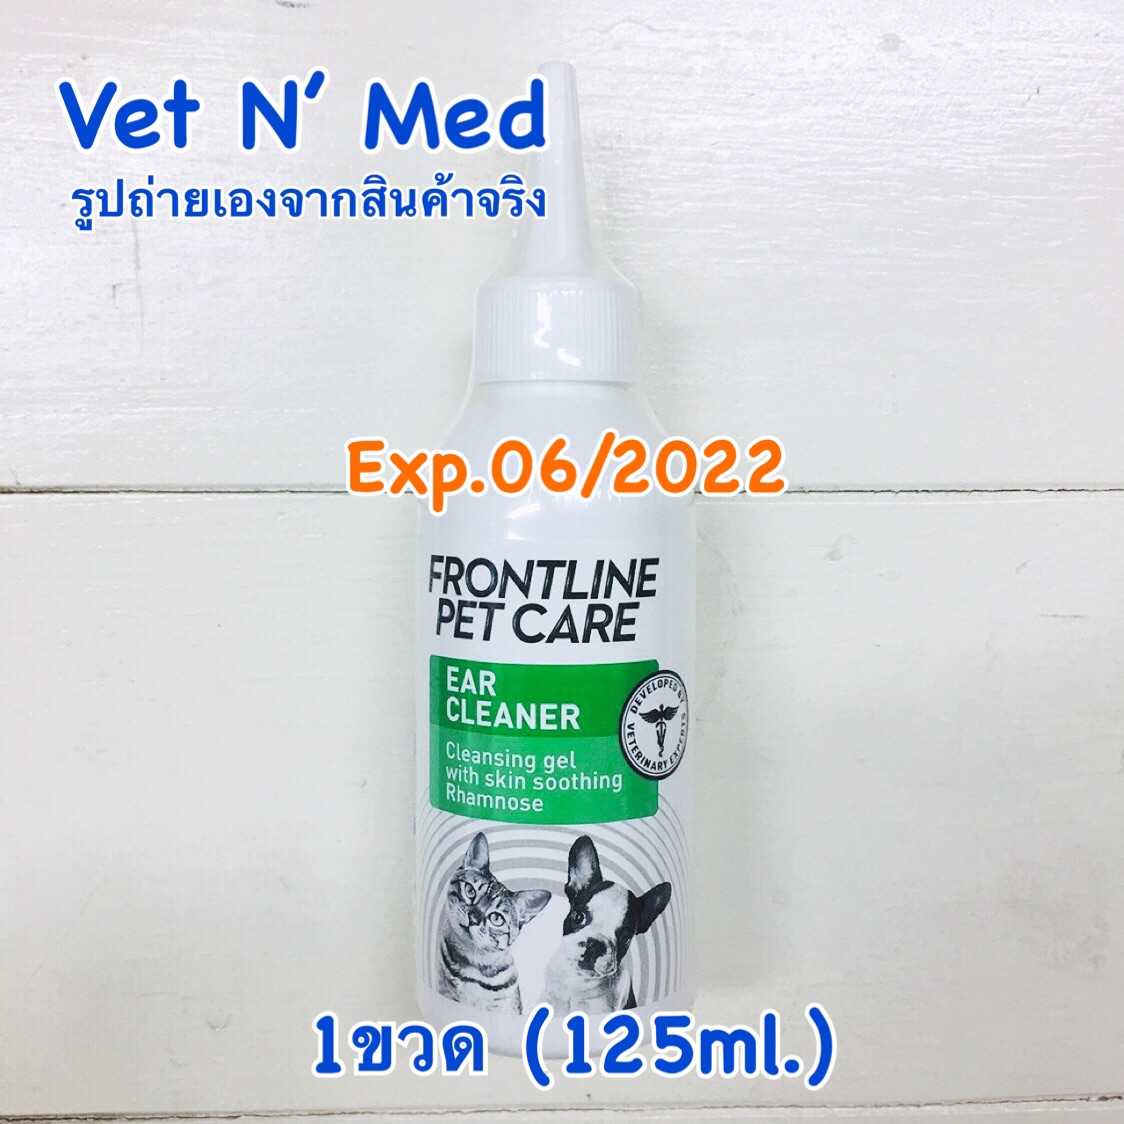 FrontlinePetCare Ear Cleaner เจลทำความสะอาดหู สุนัขและแมว (1ขวด*125ml)